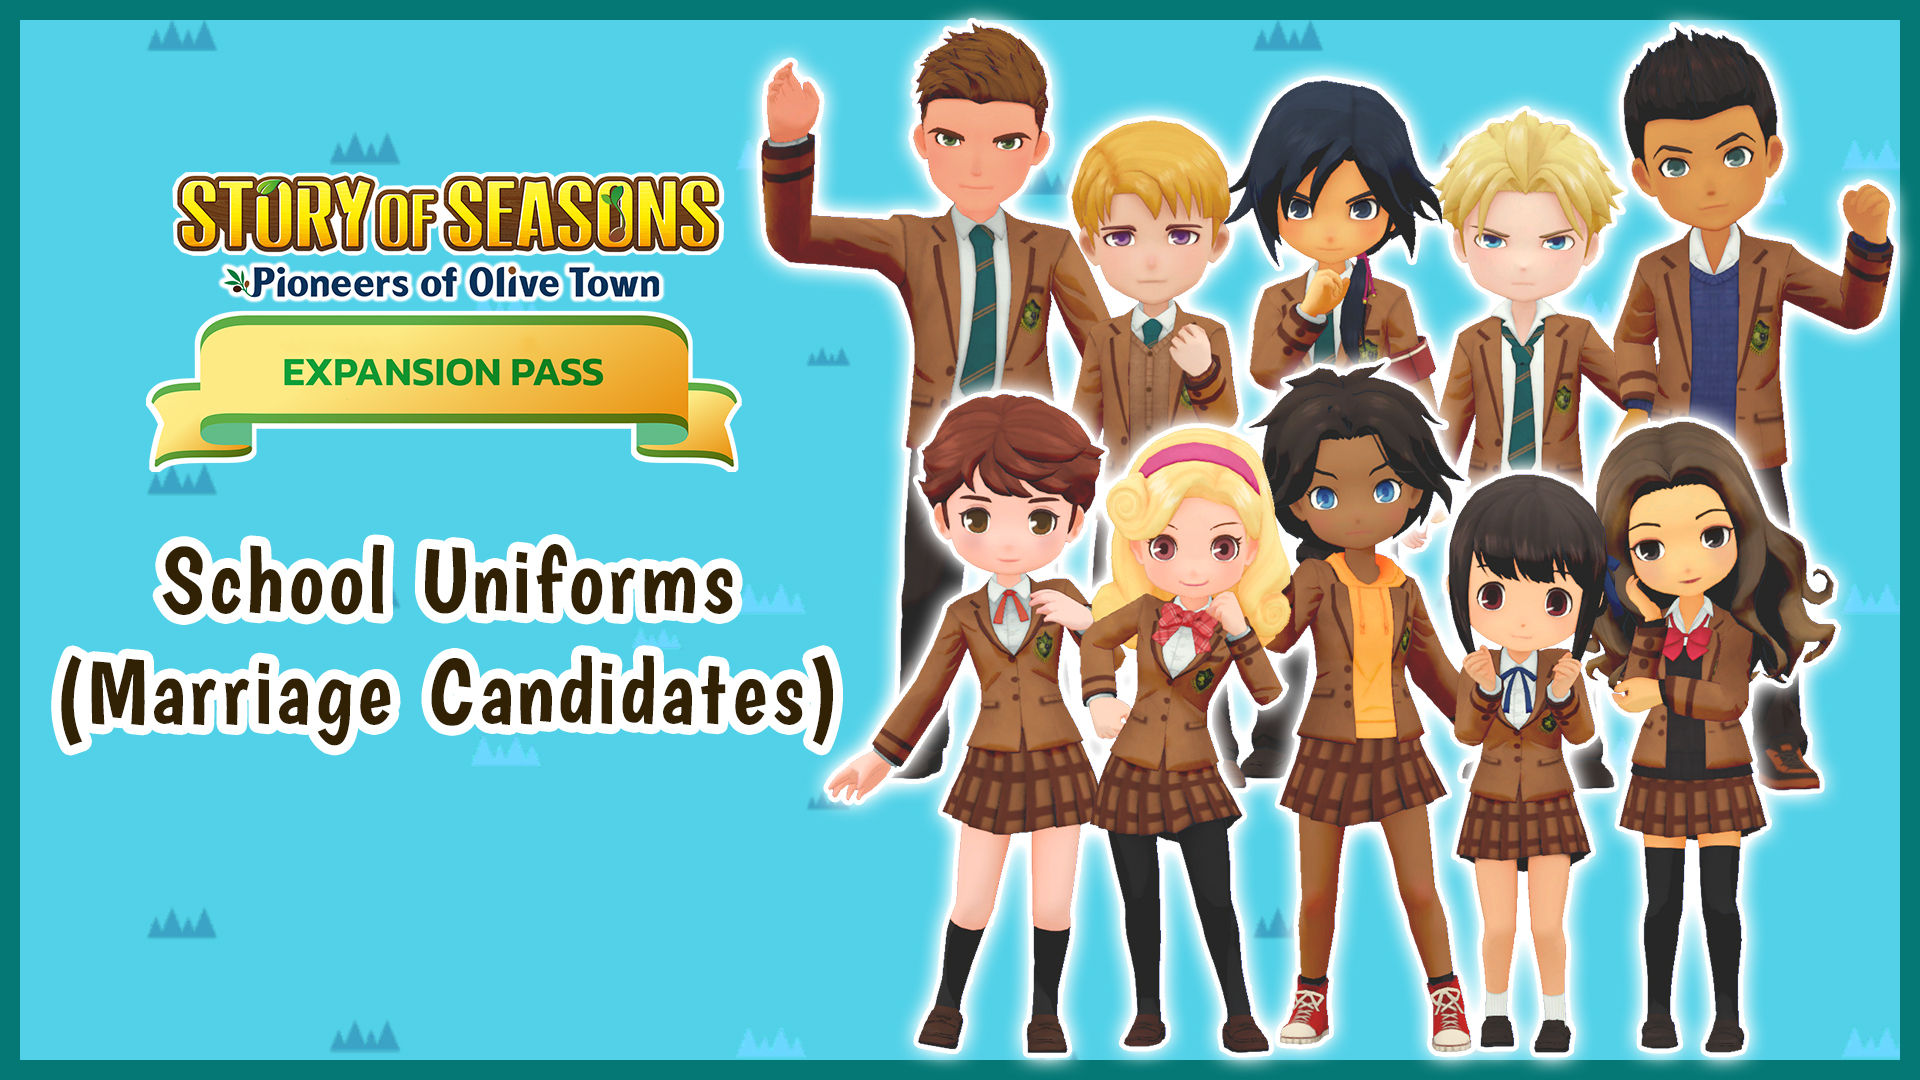 School Uniforms (Marriage Candidates)